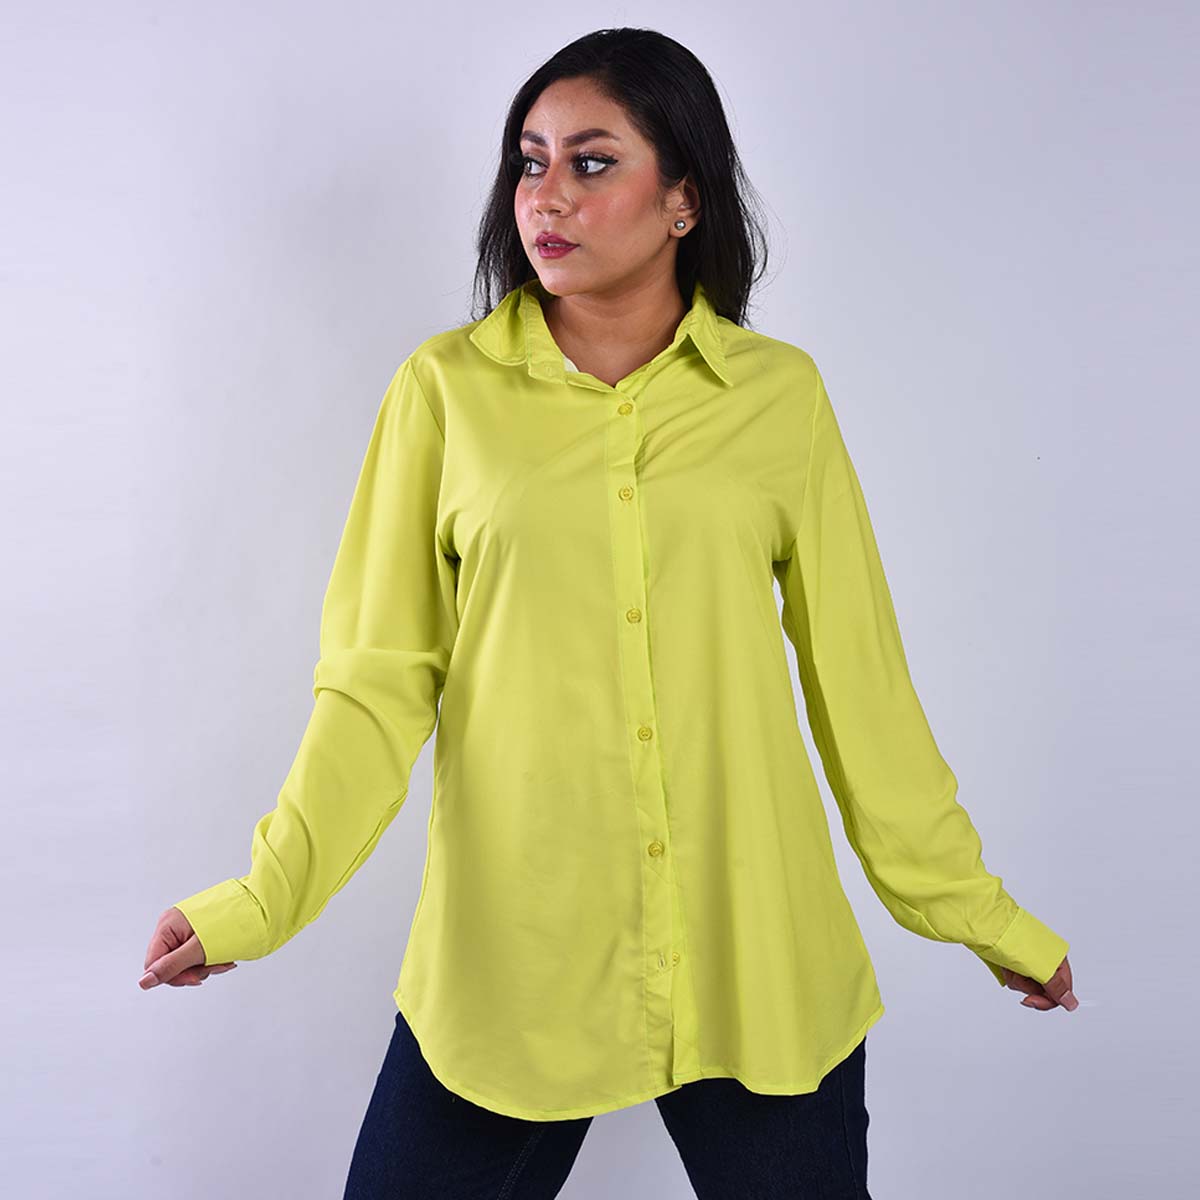 Urban Basics - Yellow Soft Shirt